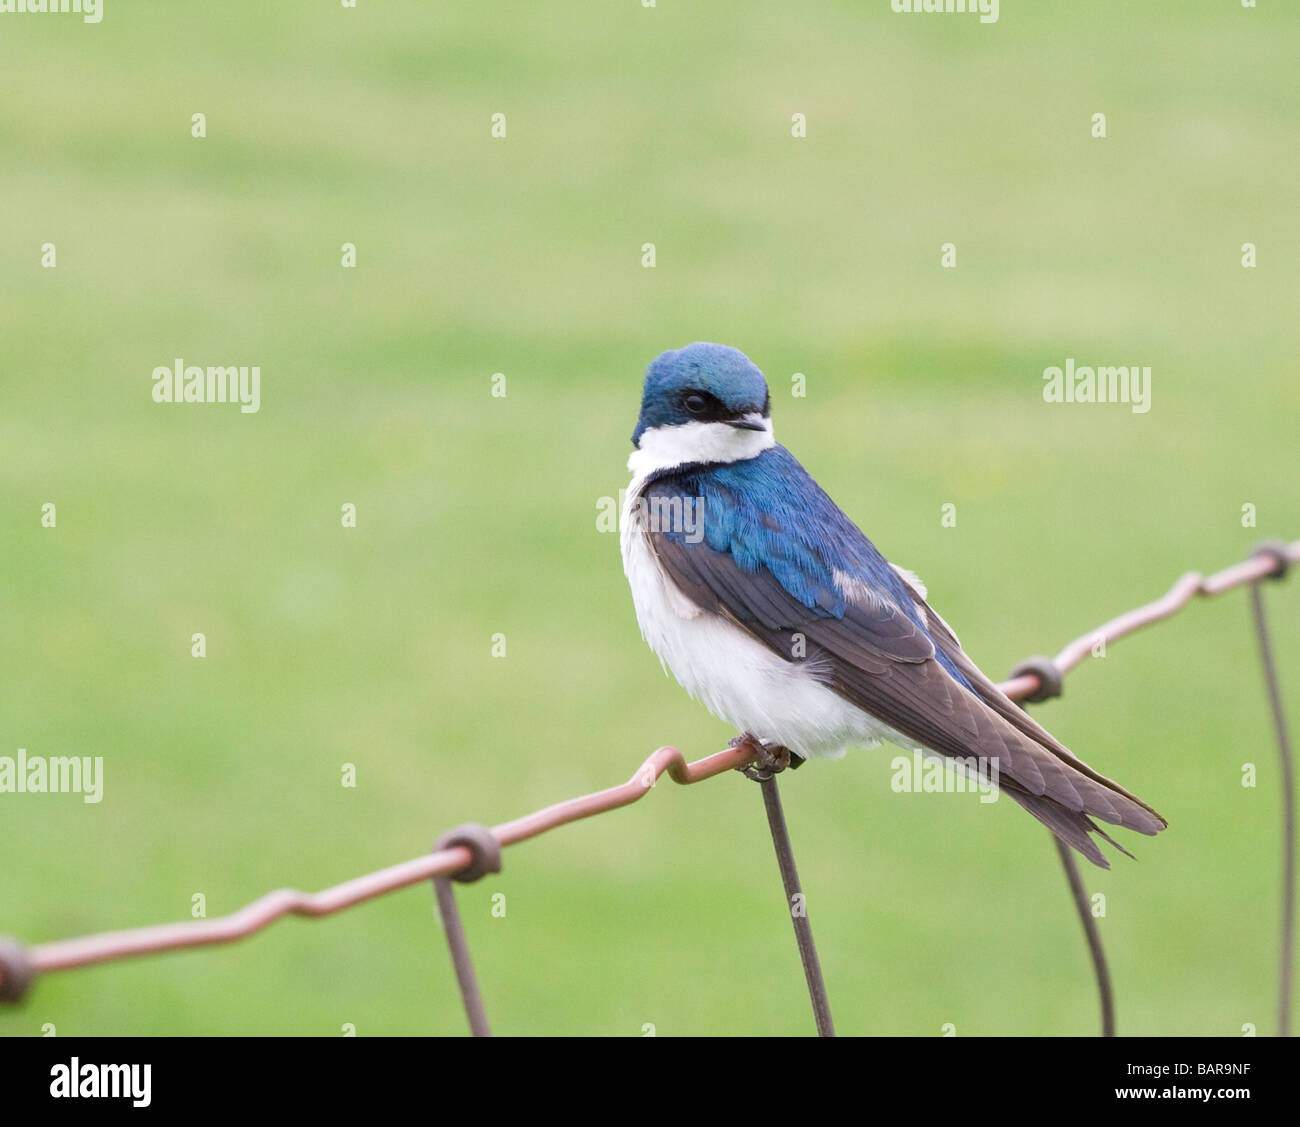 Tree Swallow bird Banque D'Images